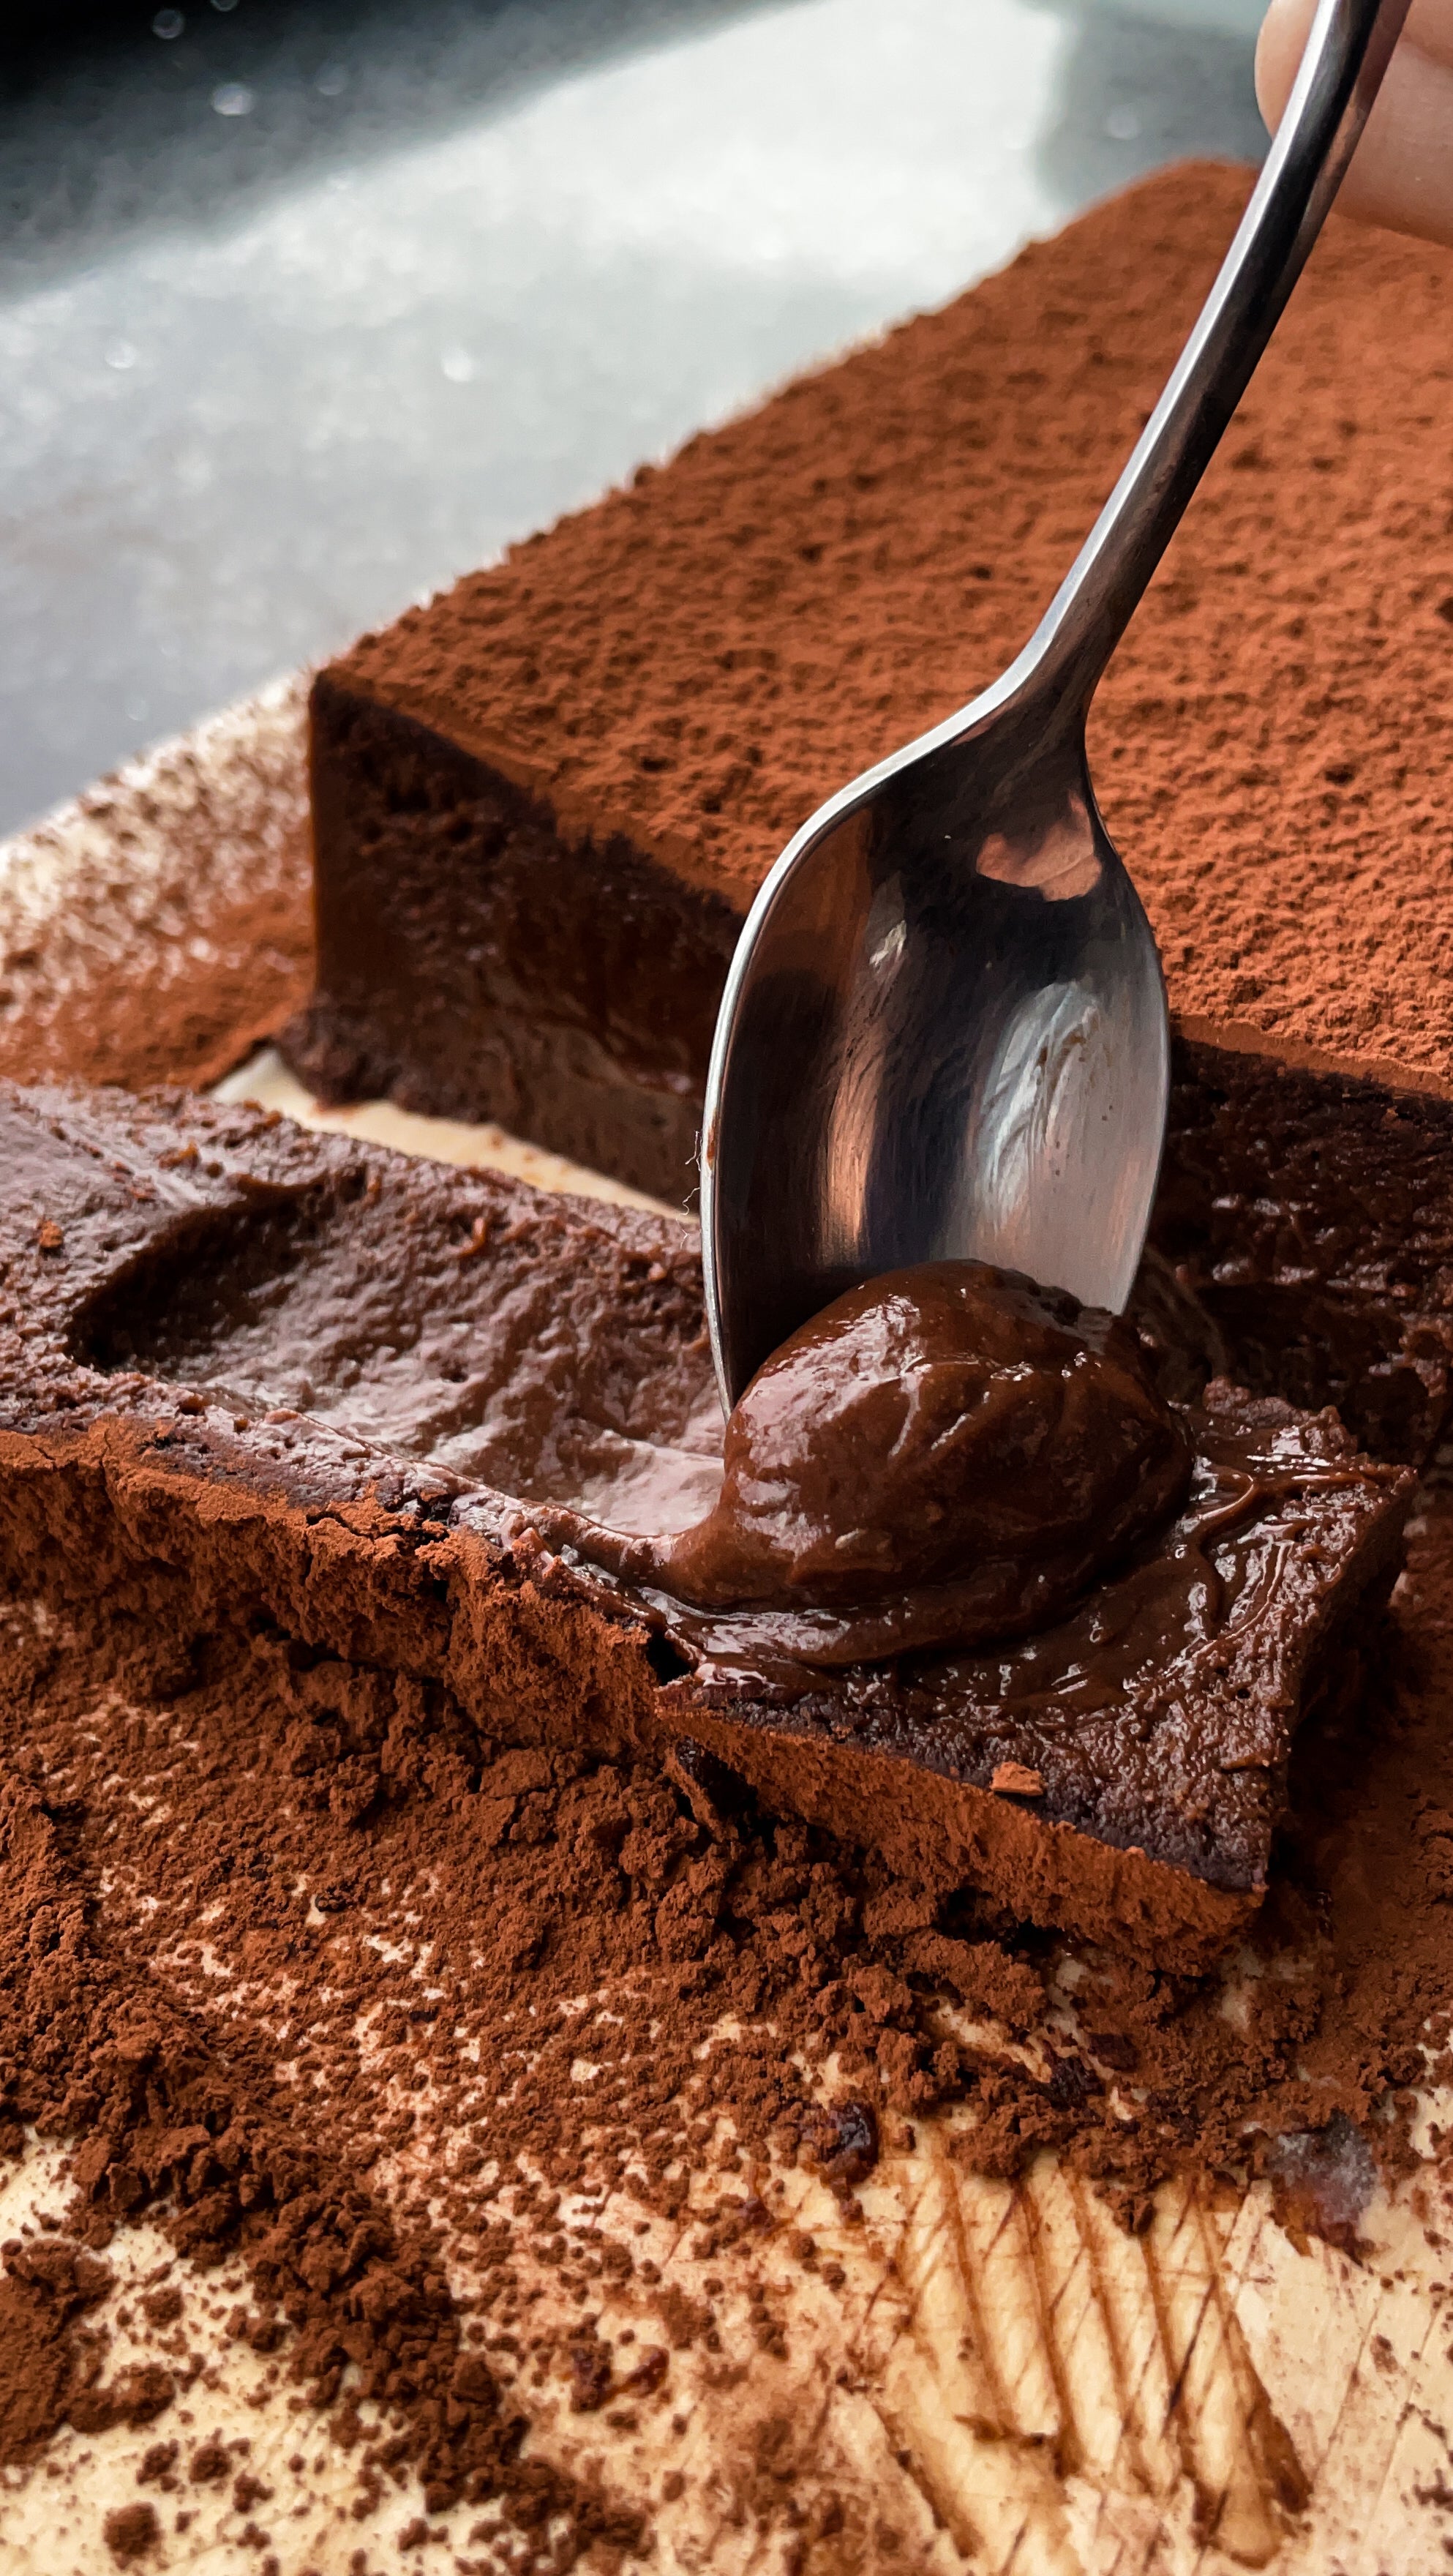 Belgian Dark Chocolate Espresso Terrine | Baking Kit | ~10-12 servings